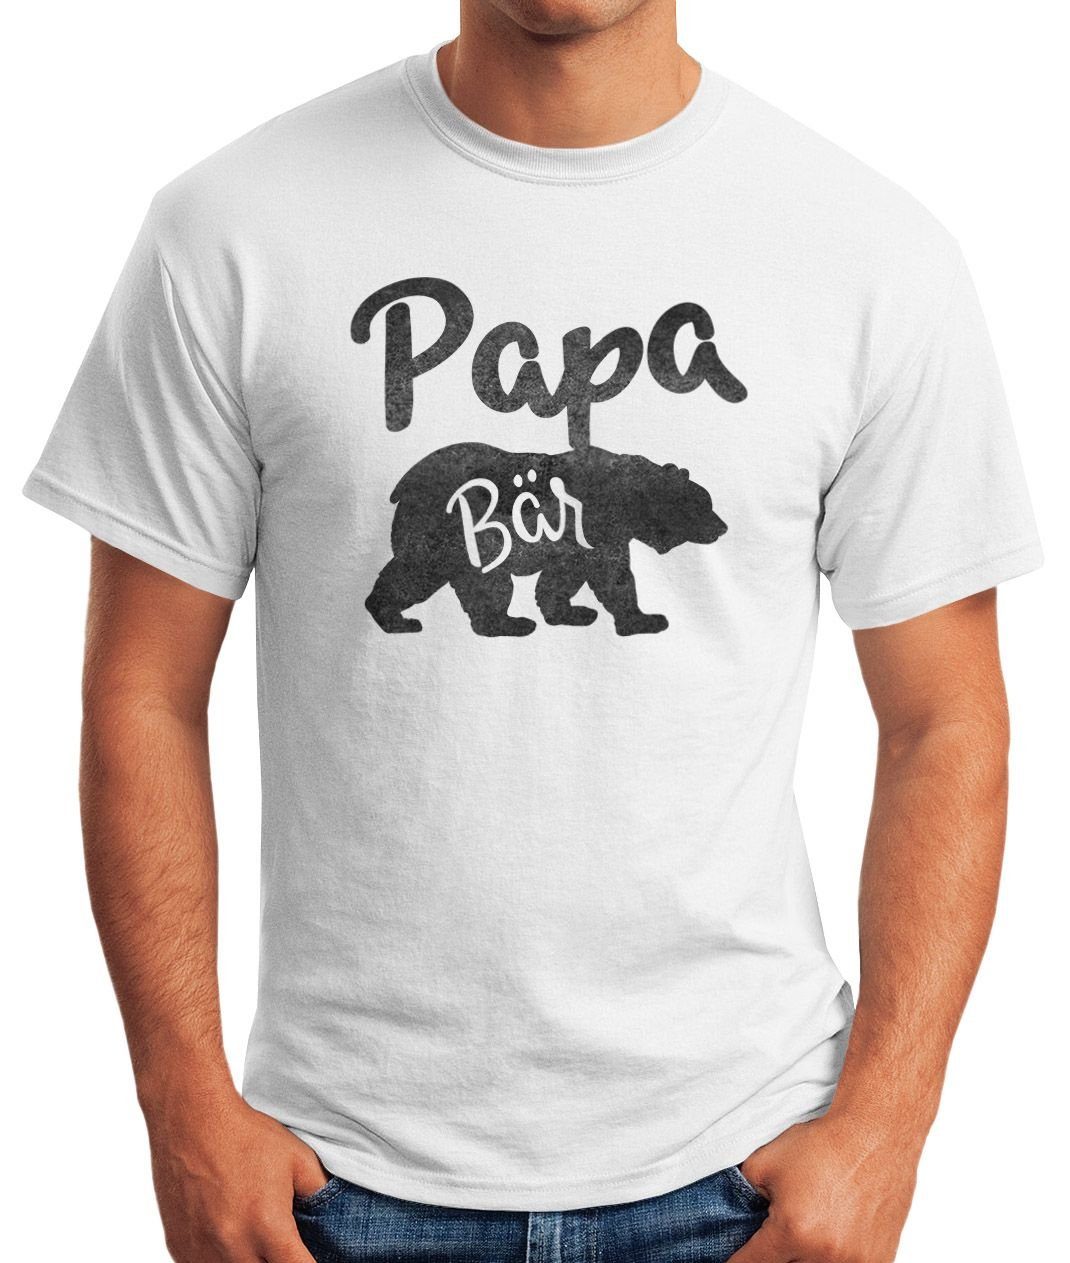 Moonworks® MoonWorks Print-Shirt mit Familie Shirt Watercolor Print weiß Herren Bären T-Shirt Bär Papa Papa